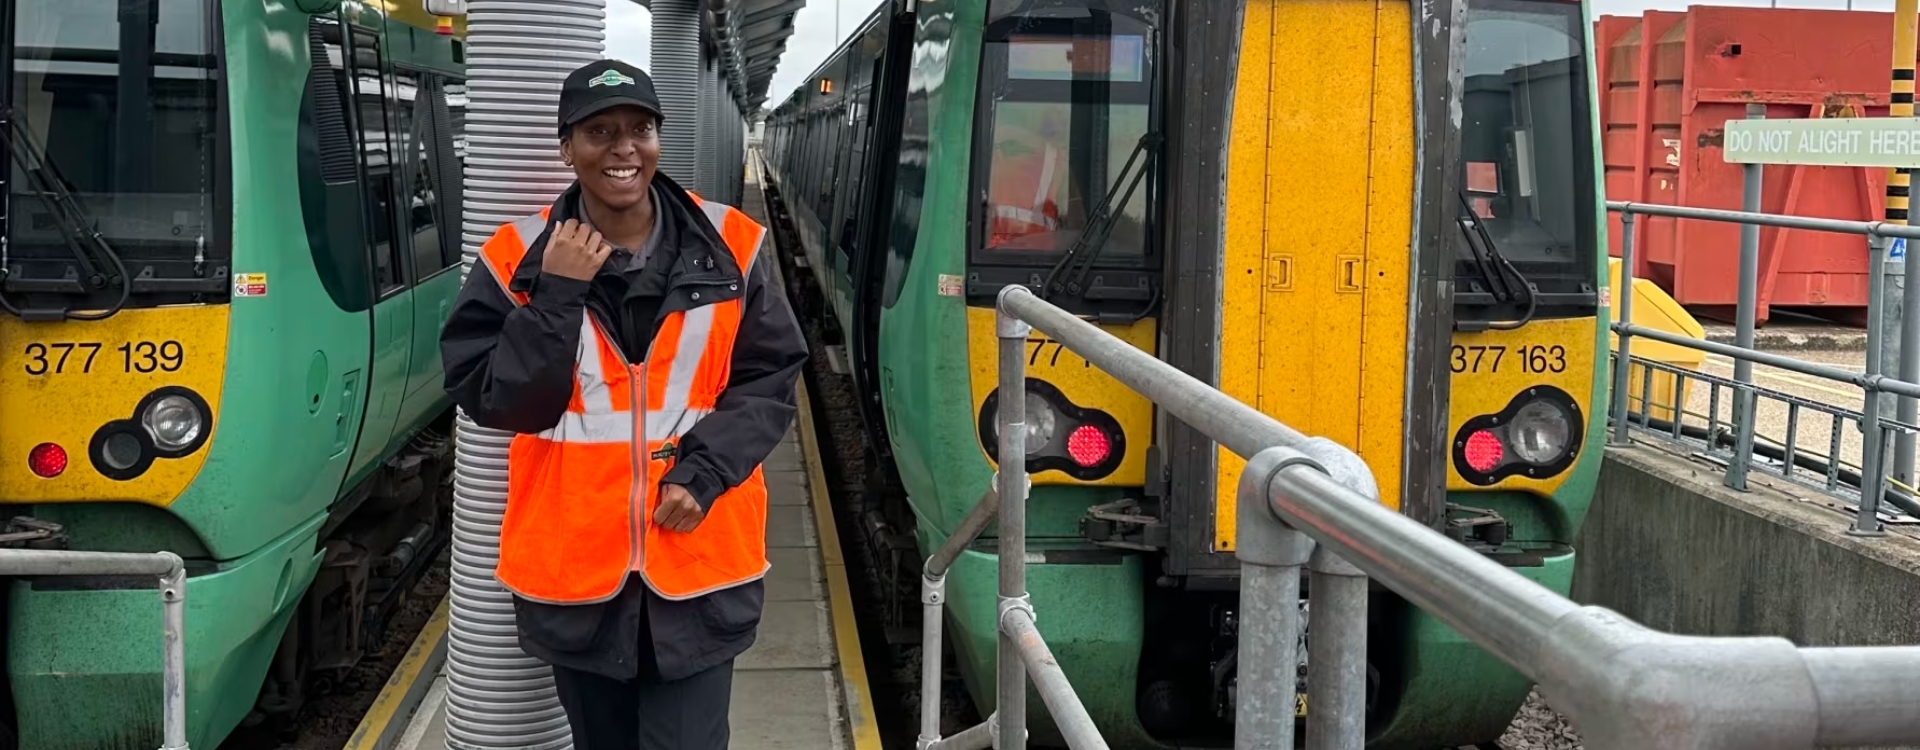 Rail operator increases female driver numbers through dedicated partnership